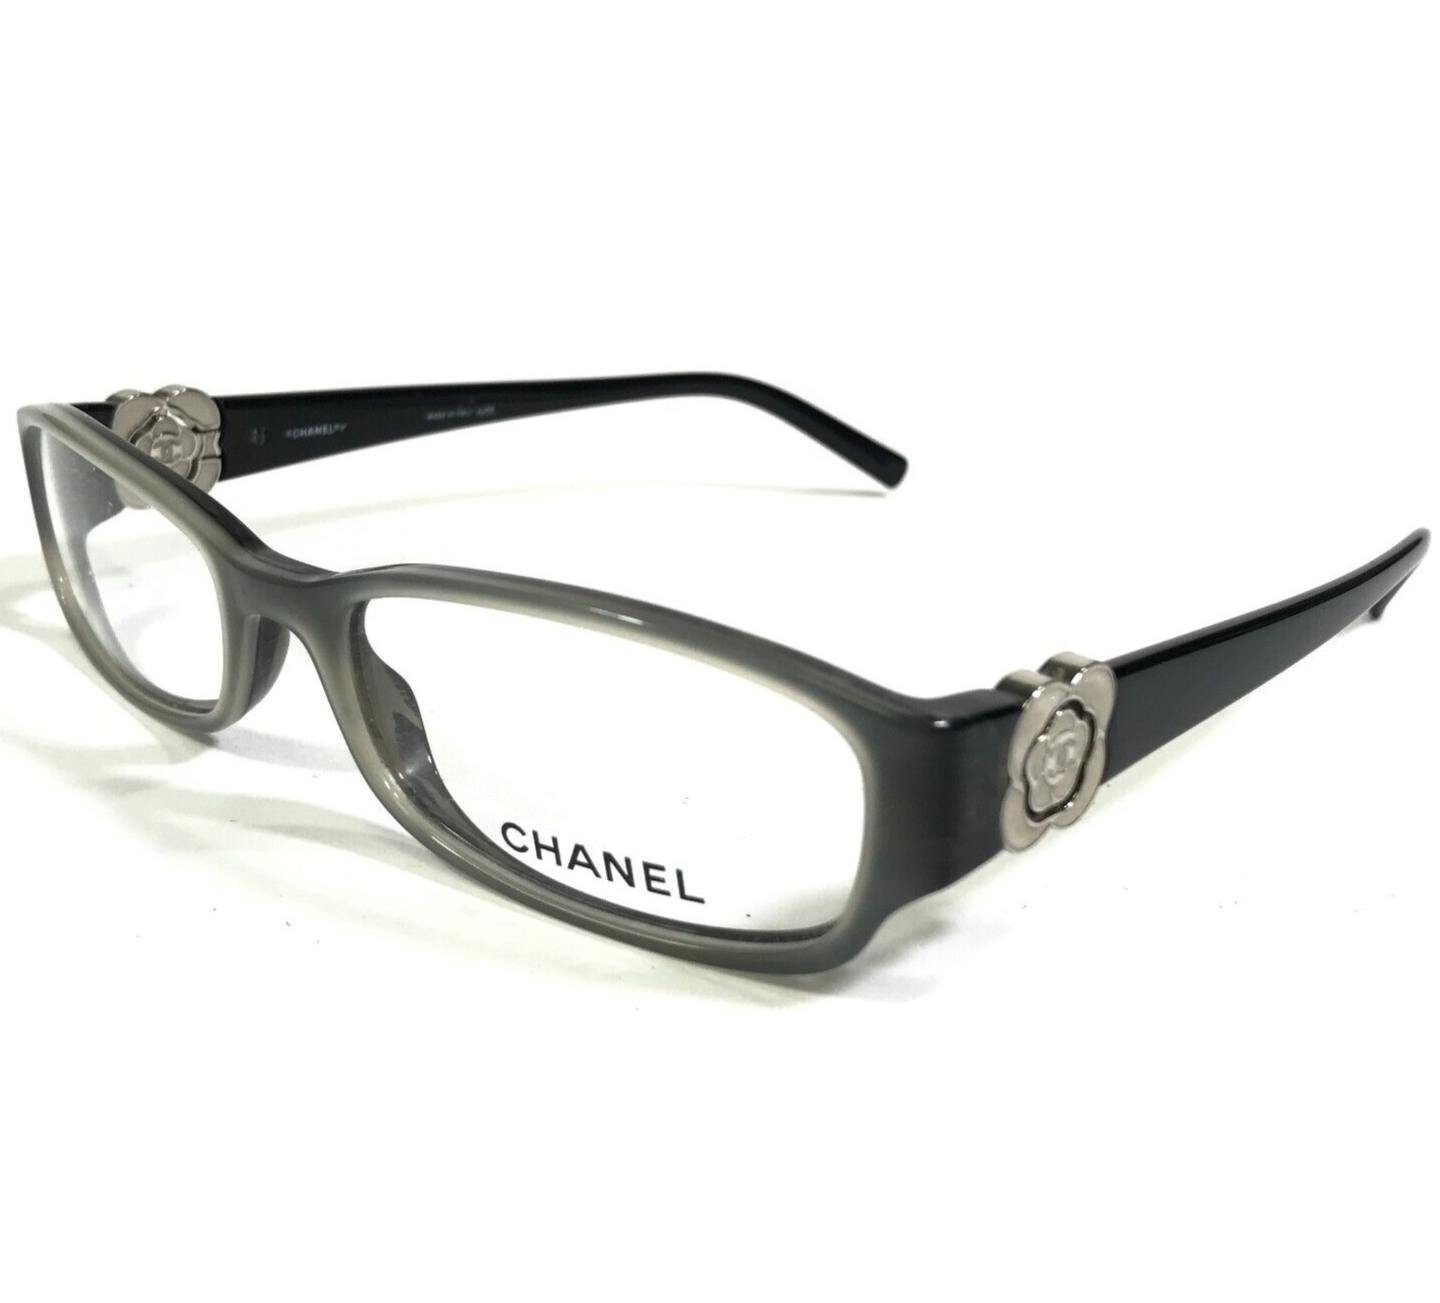 Primary image for Chanel 3131 c.845 Eyeglasses Frames Black Grey Rectangular Flowers 51-16-130